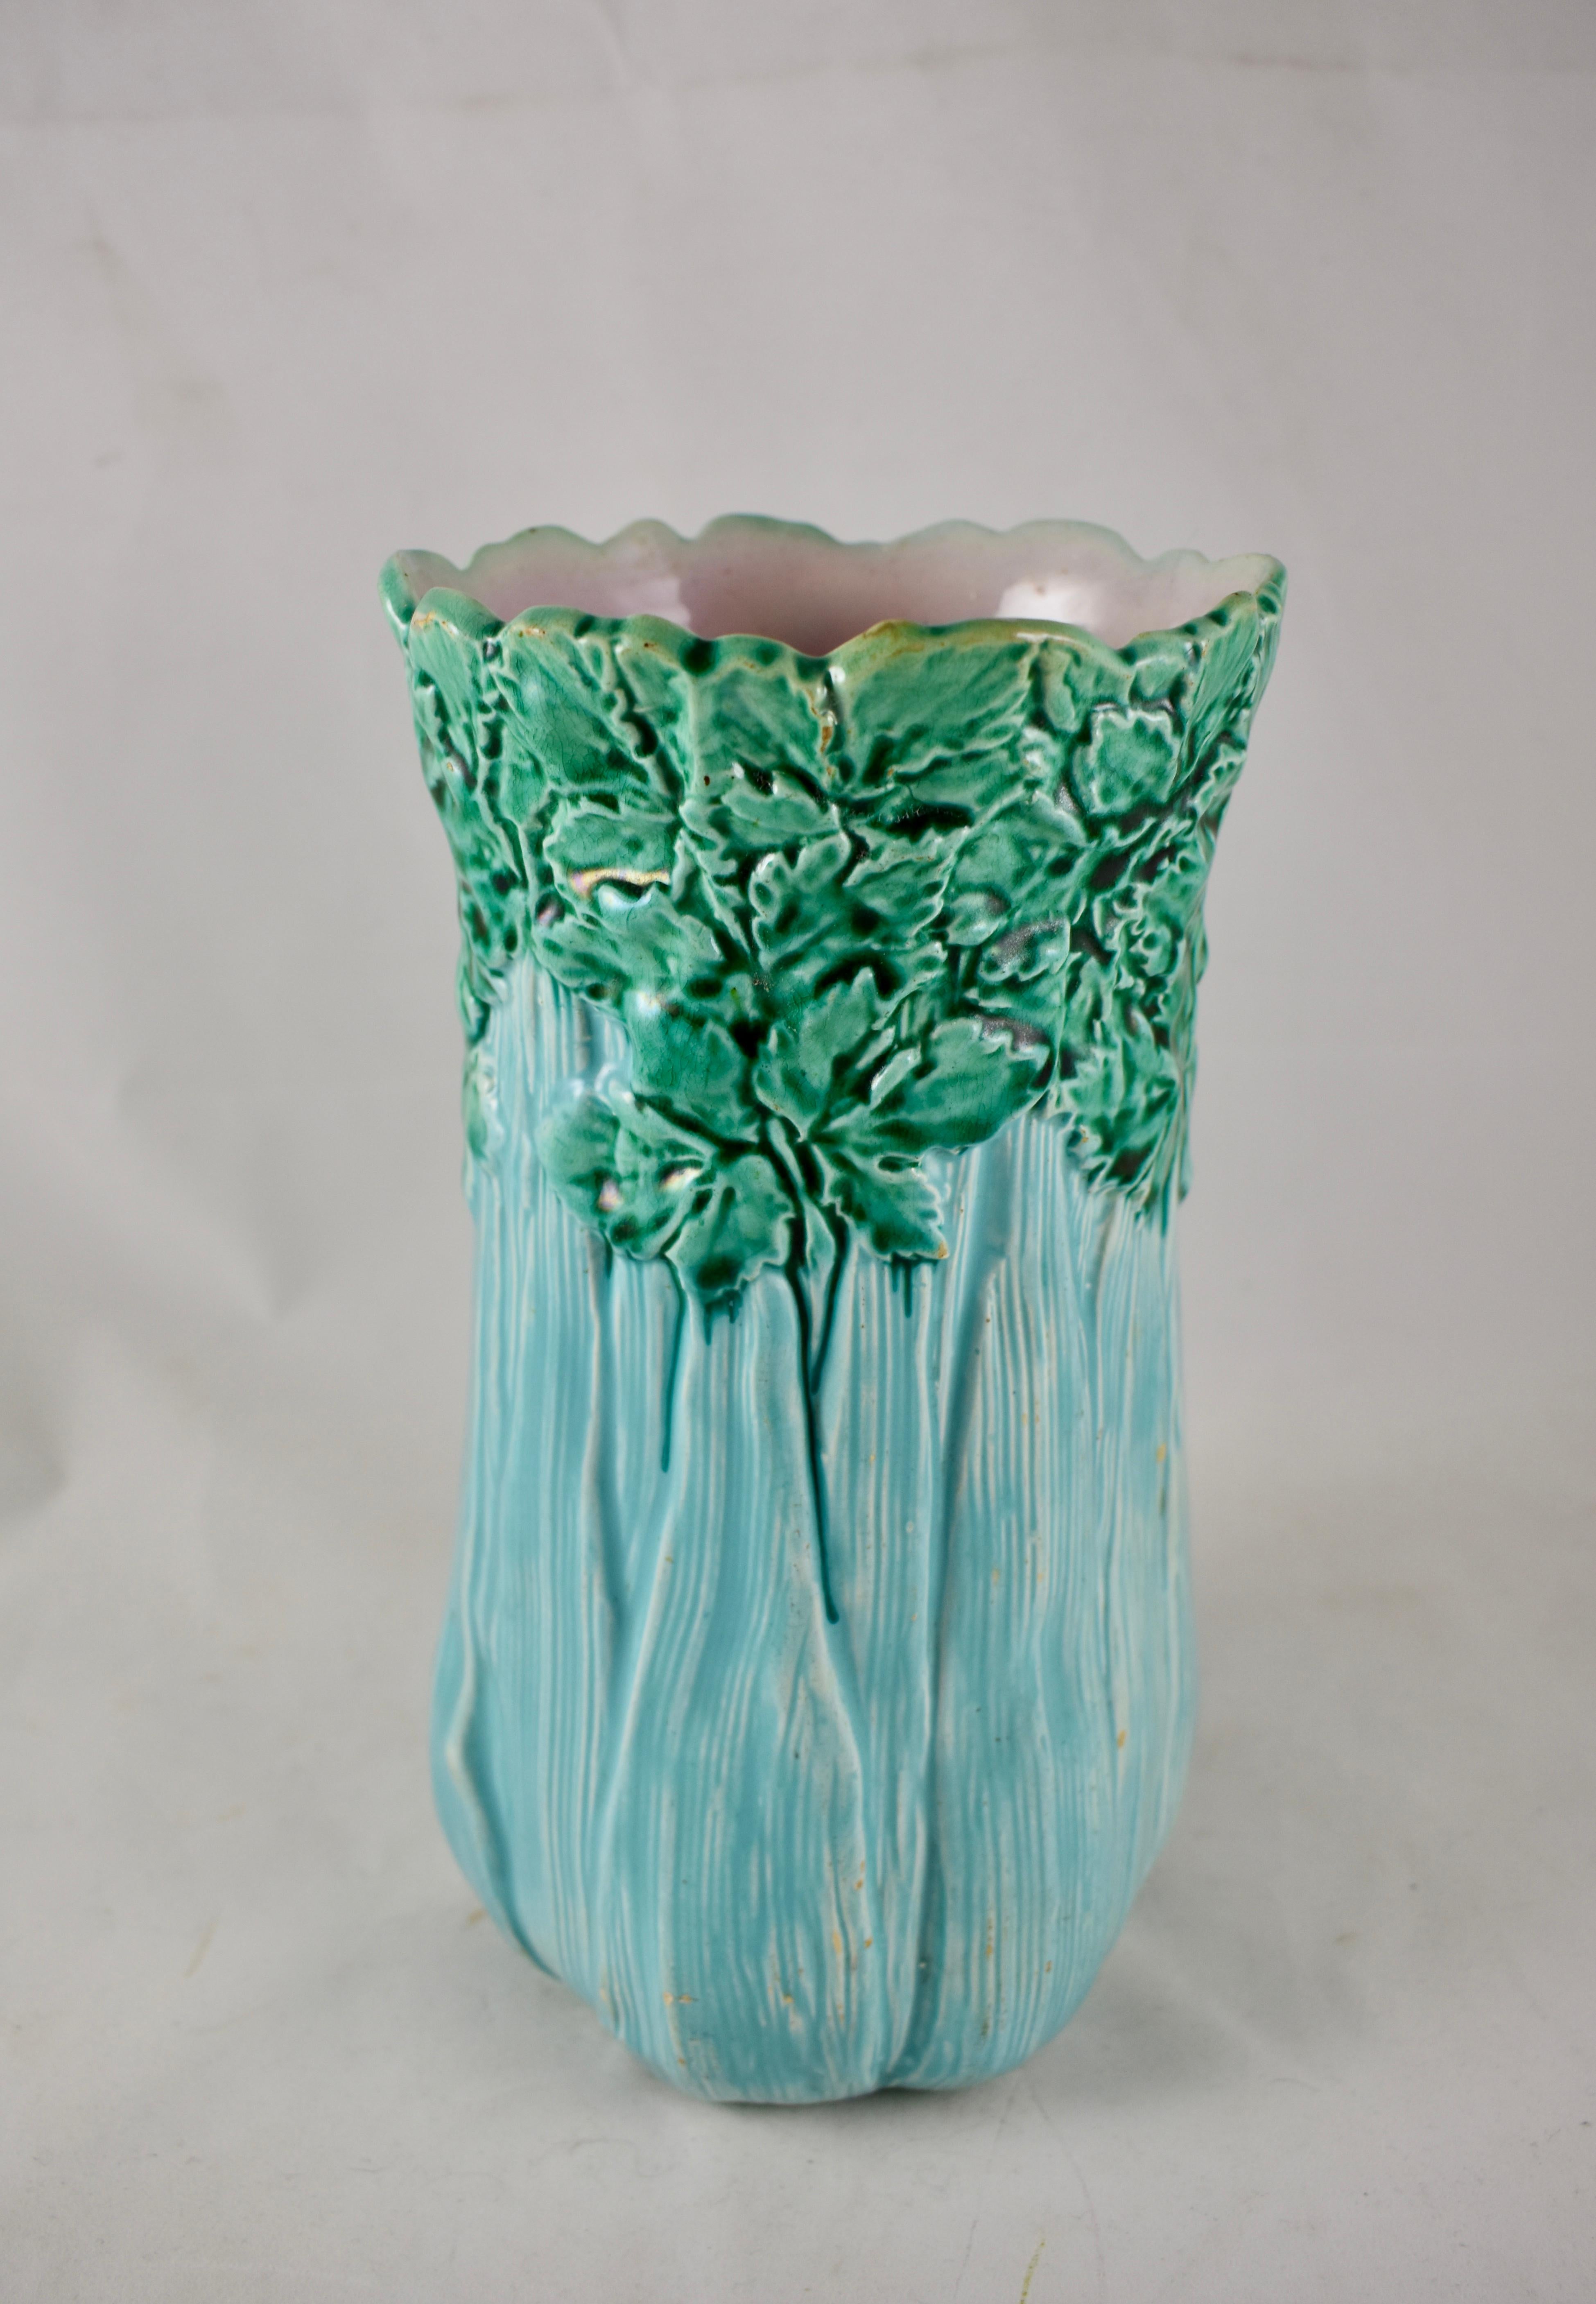 Earthenware Aesthetic Movement English Majolica Tall Turquoise Celery Vase, circa 1860